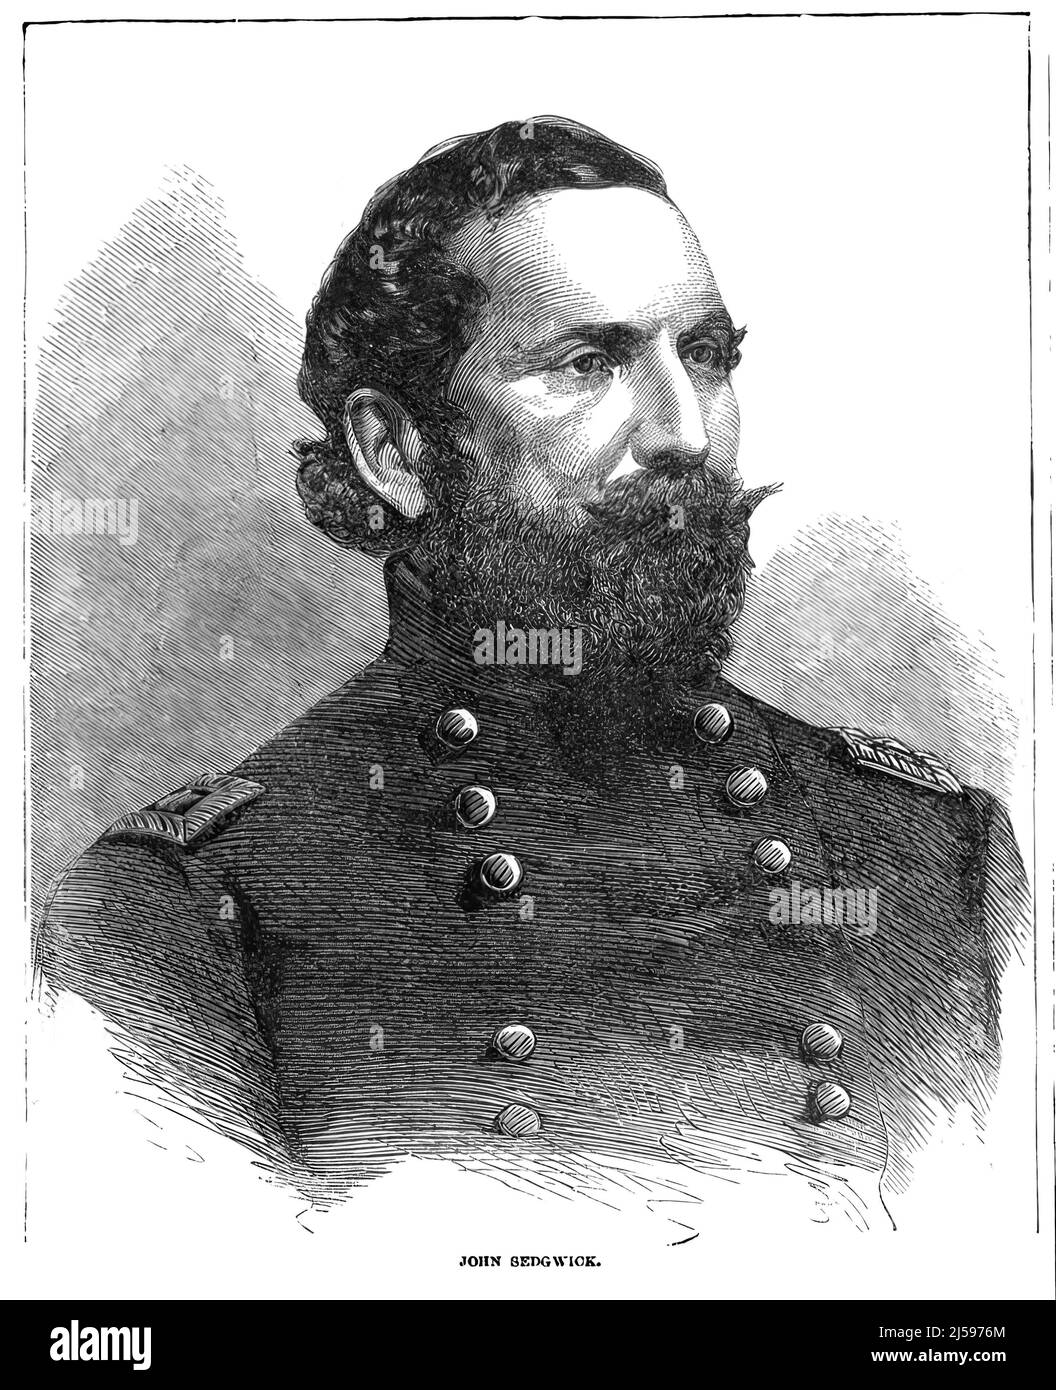 Portrait of John Sedgwick, Union Army Major General in the American Civil War. 19th century illustration Stock Photo